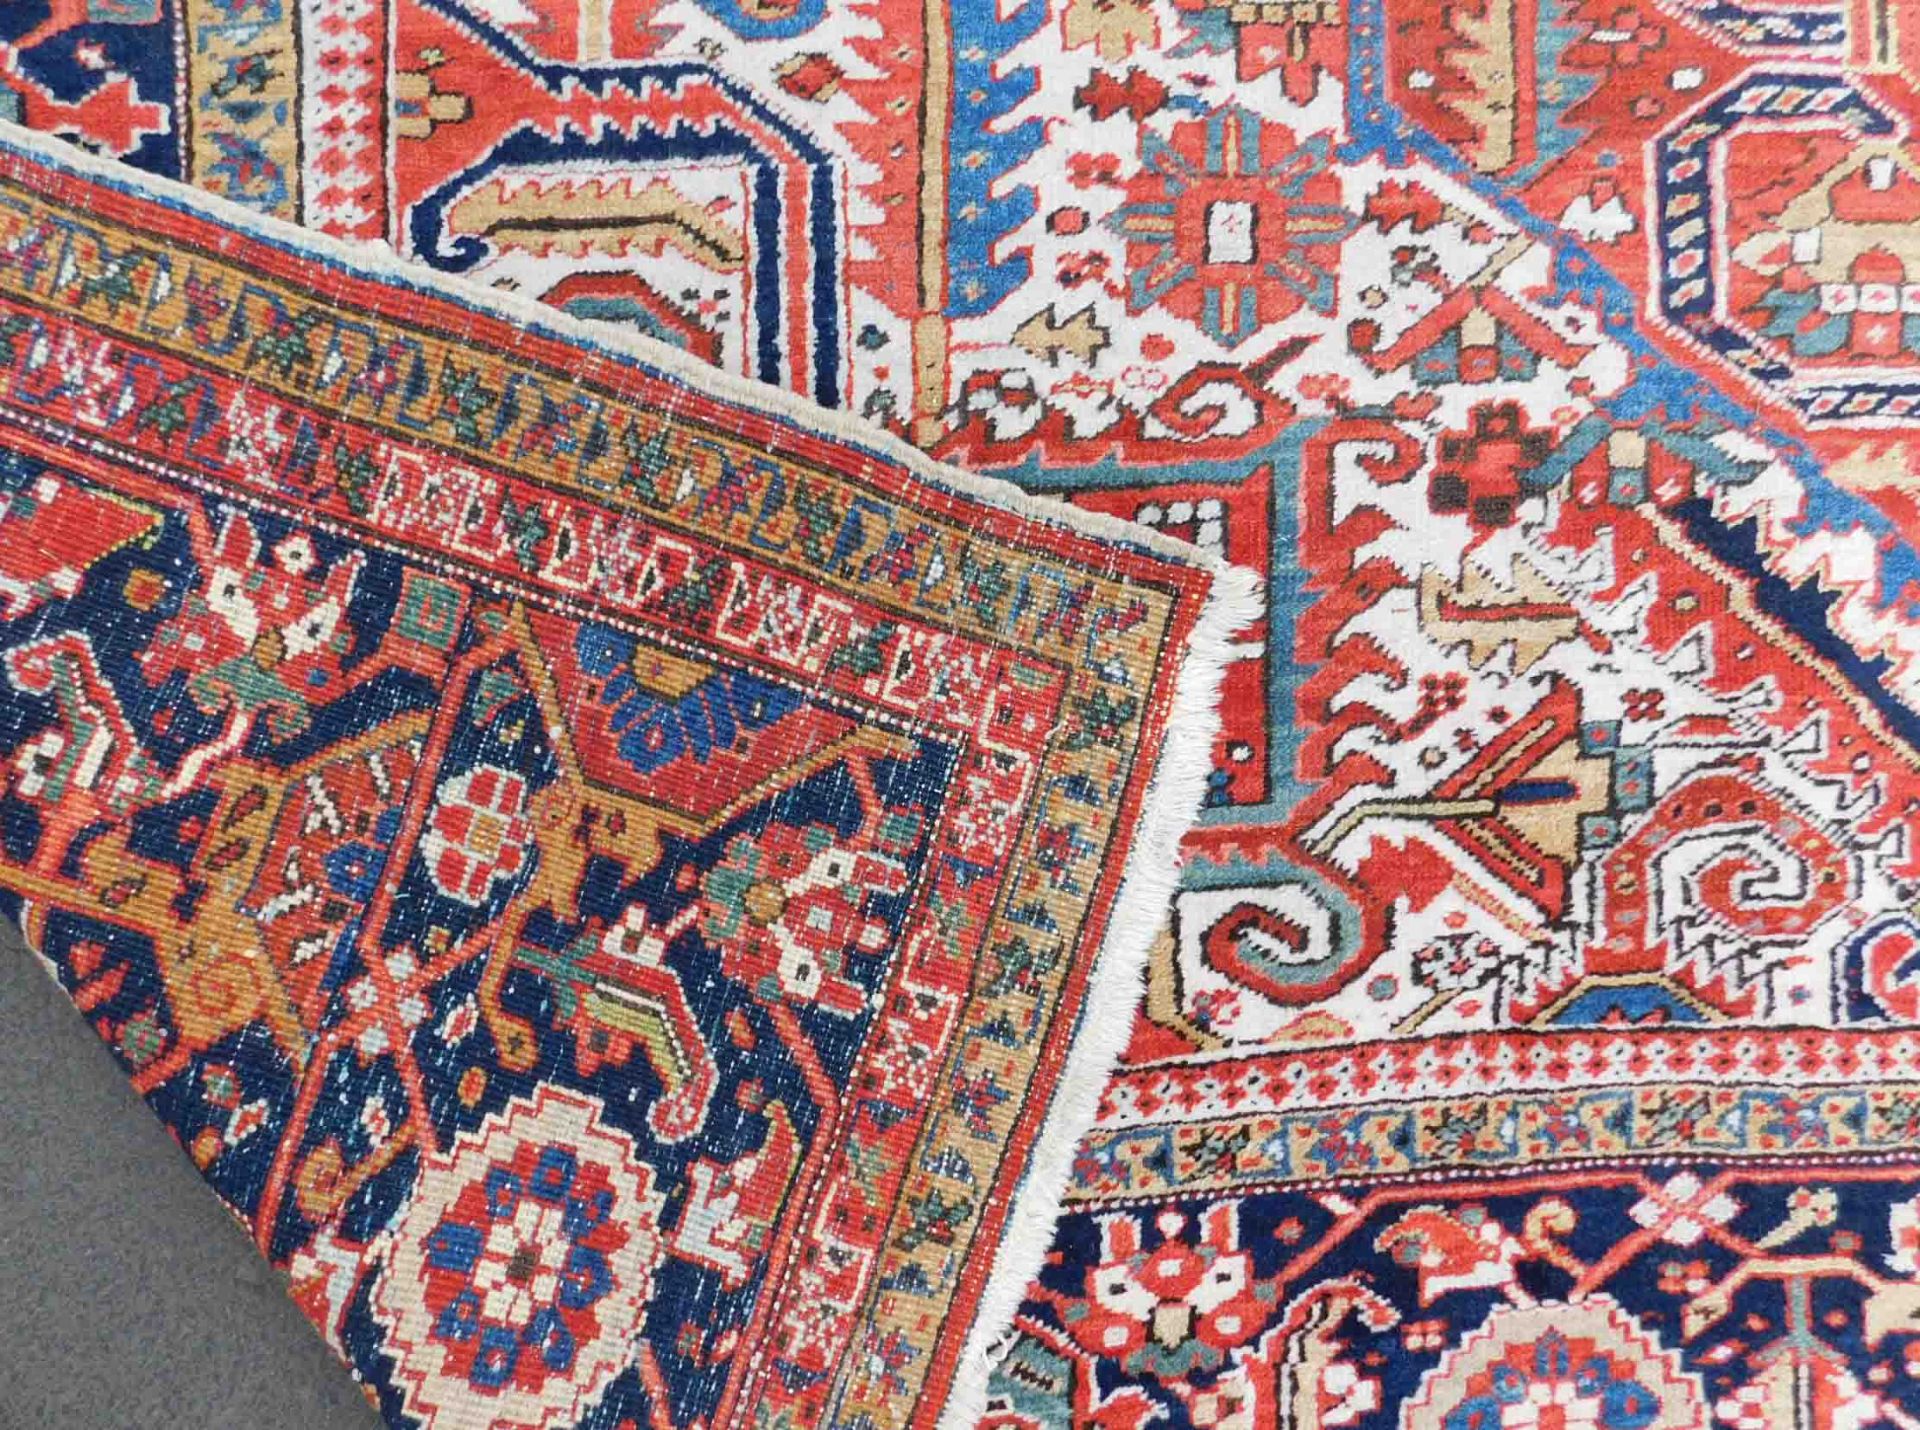 Heriz Persian carpet. Iran. Around 80 - 120 years old. - Image 7 of 15